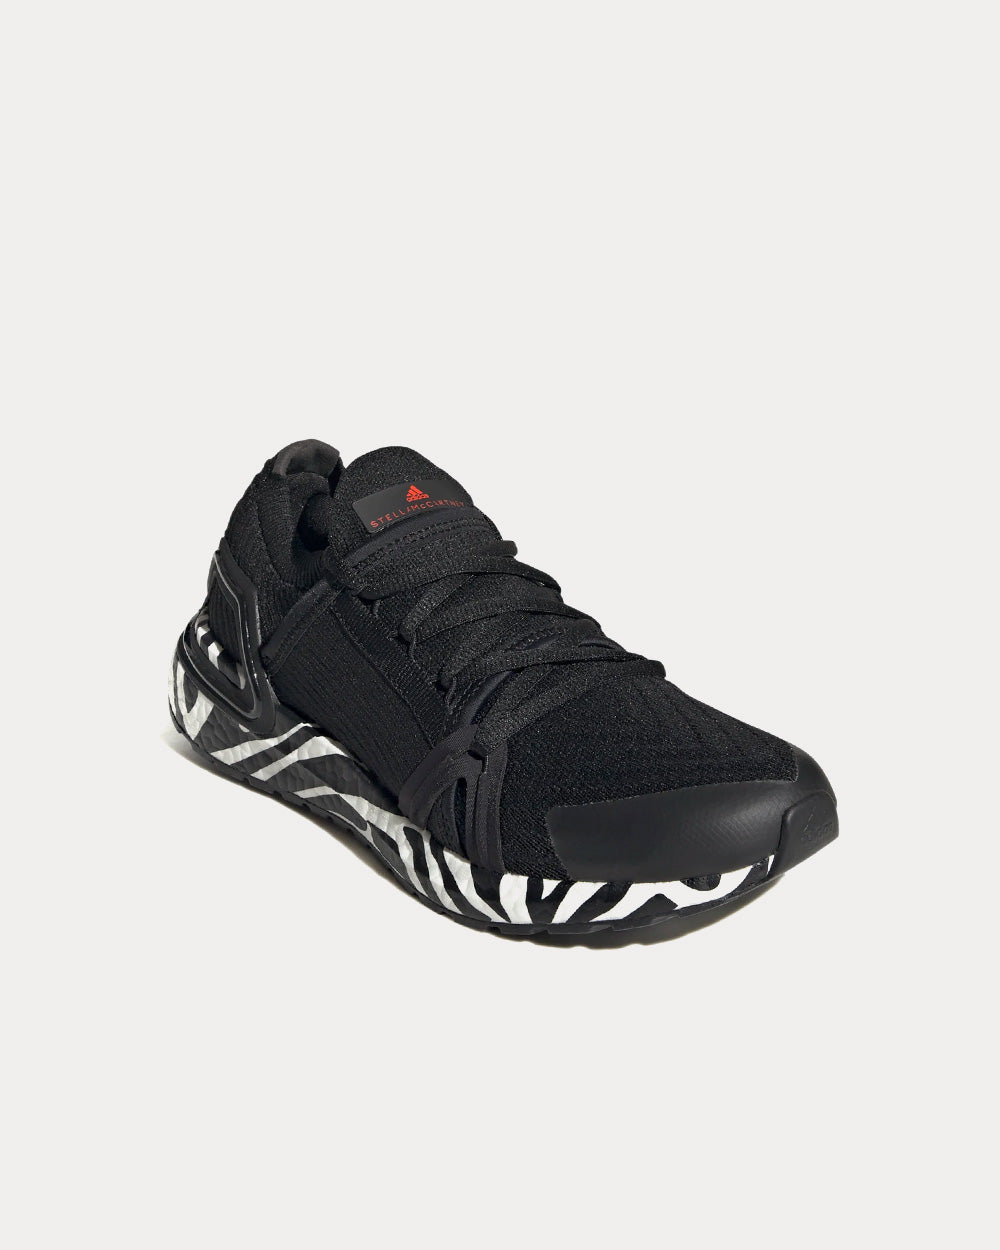 Adidas X Stella McCartney - Ultraboost 20 Core Black / Active Orange / Cloud White Running Shoes